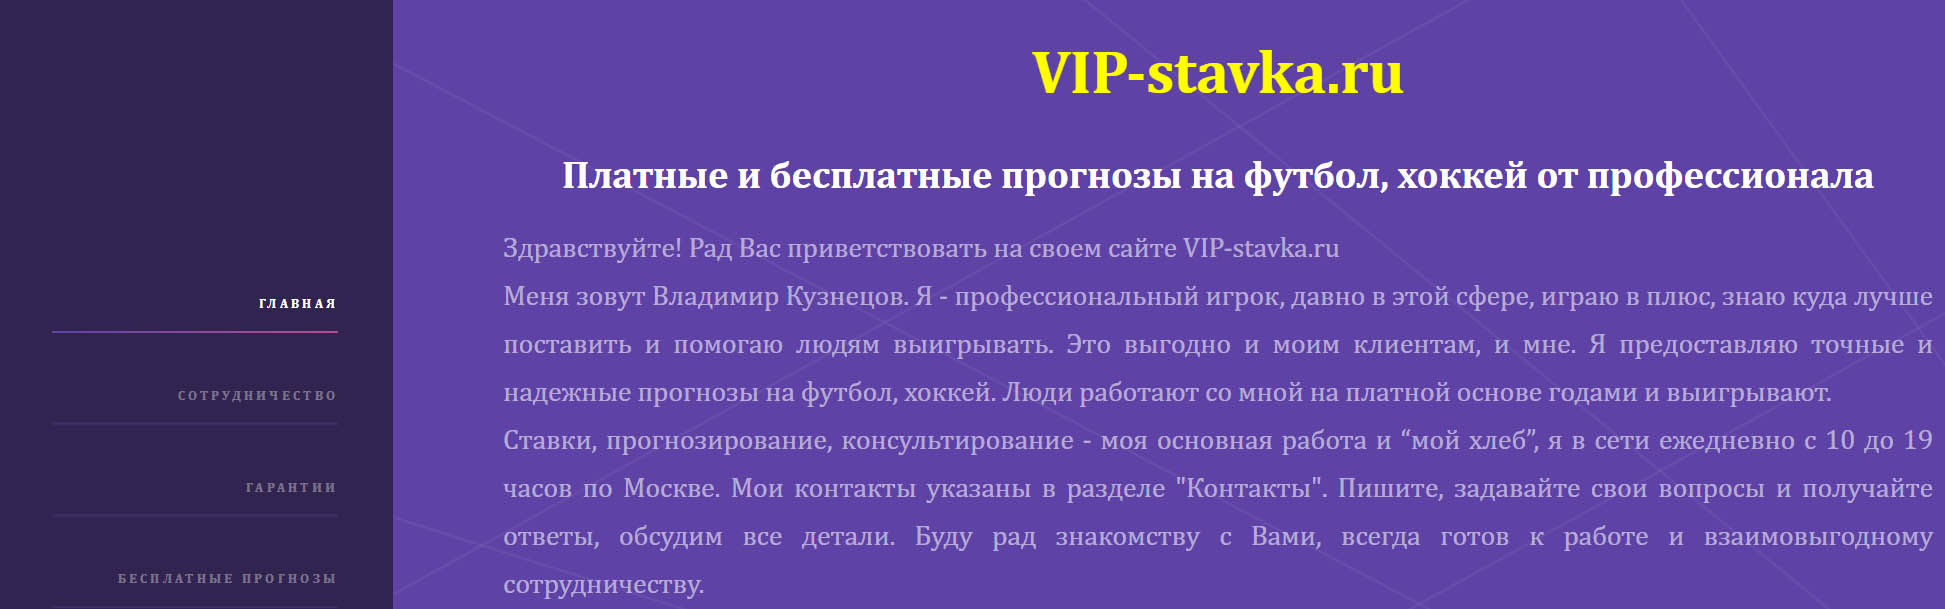 Внешний вид сайта Vip-stavka.ru